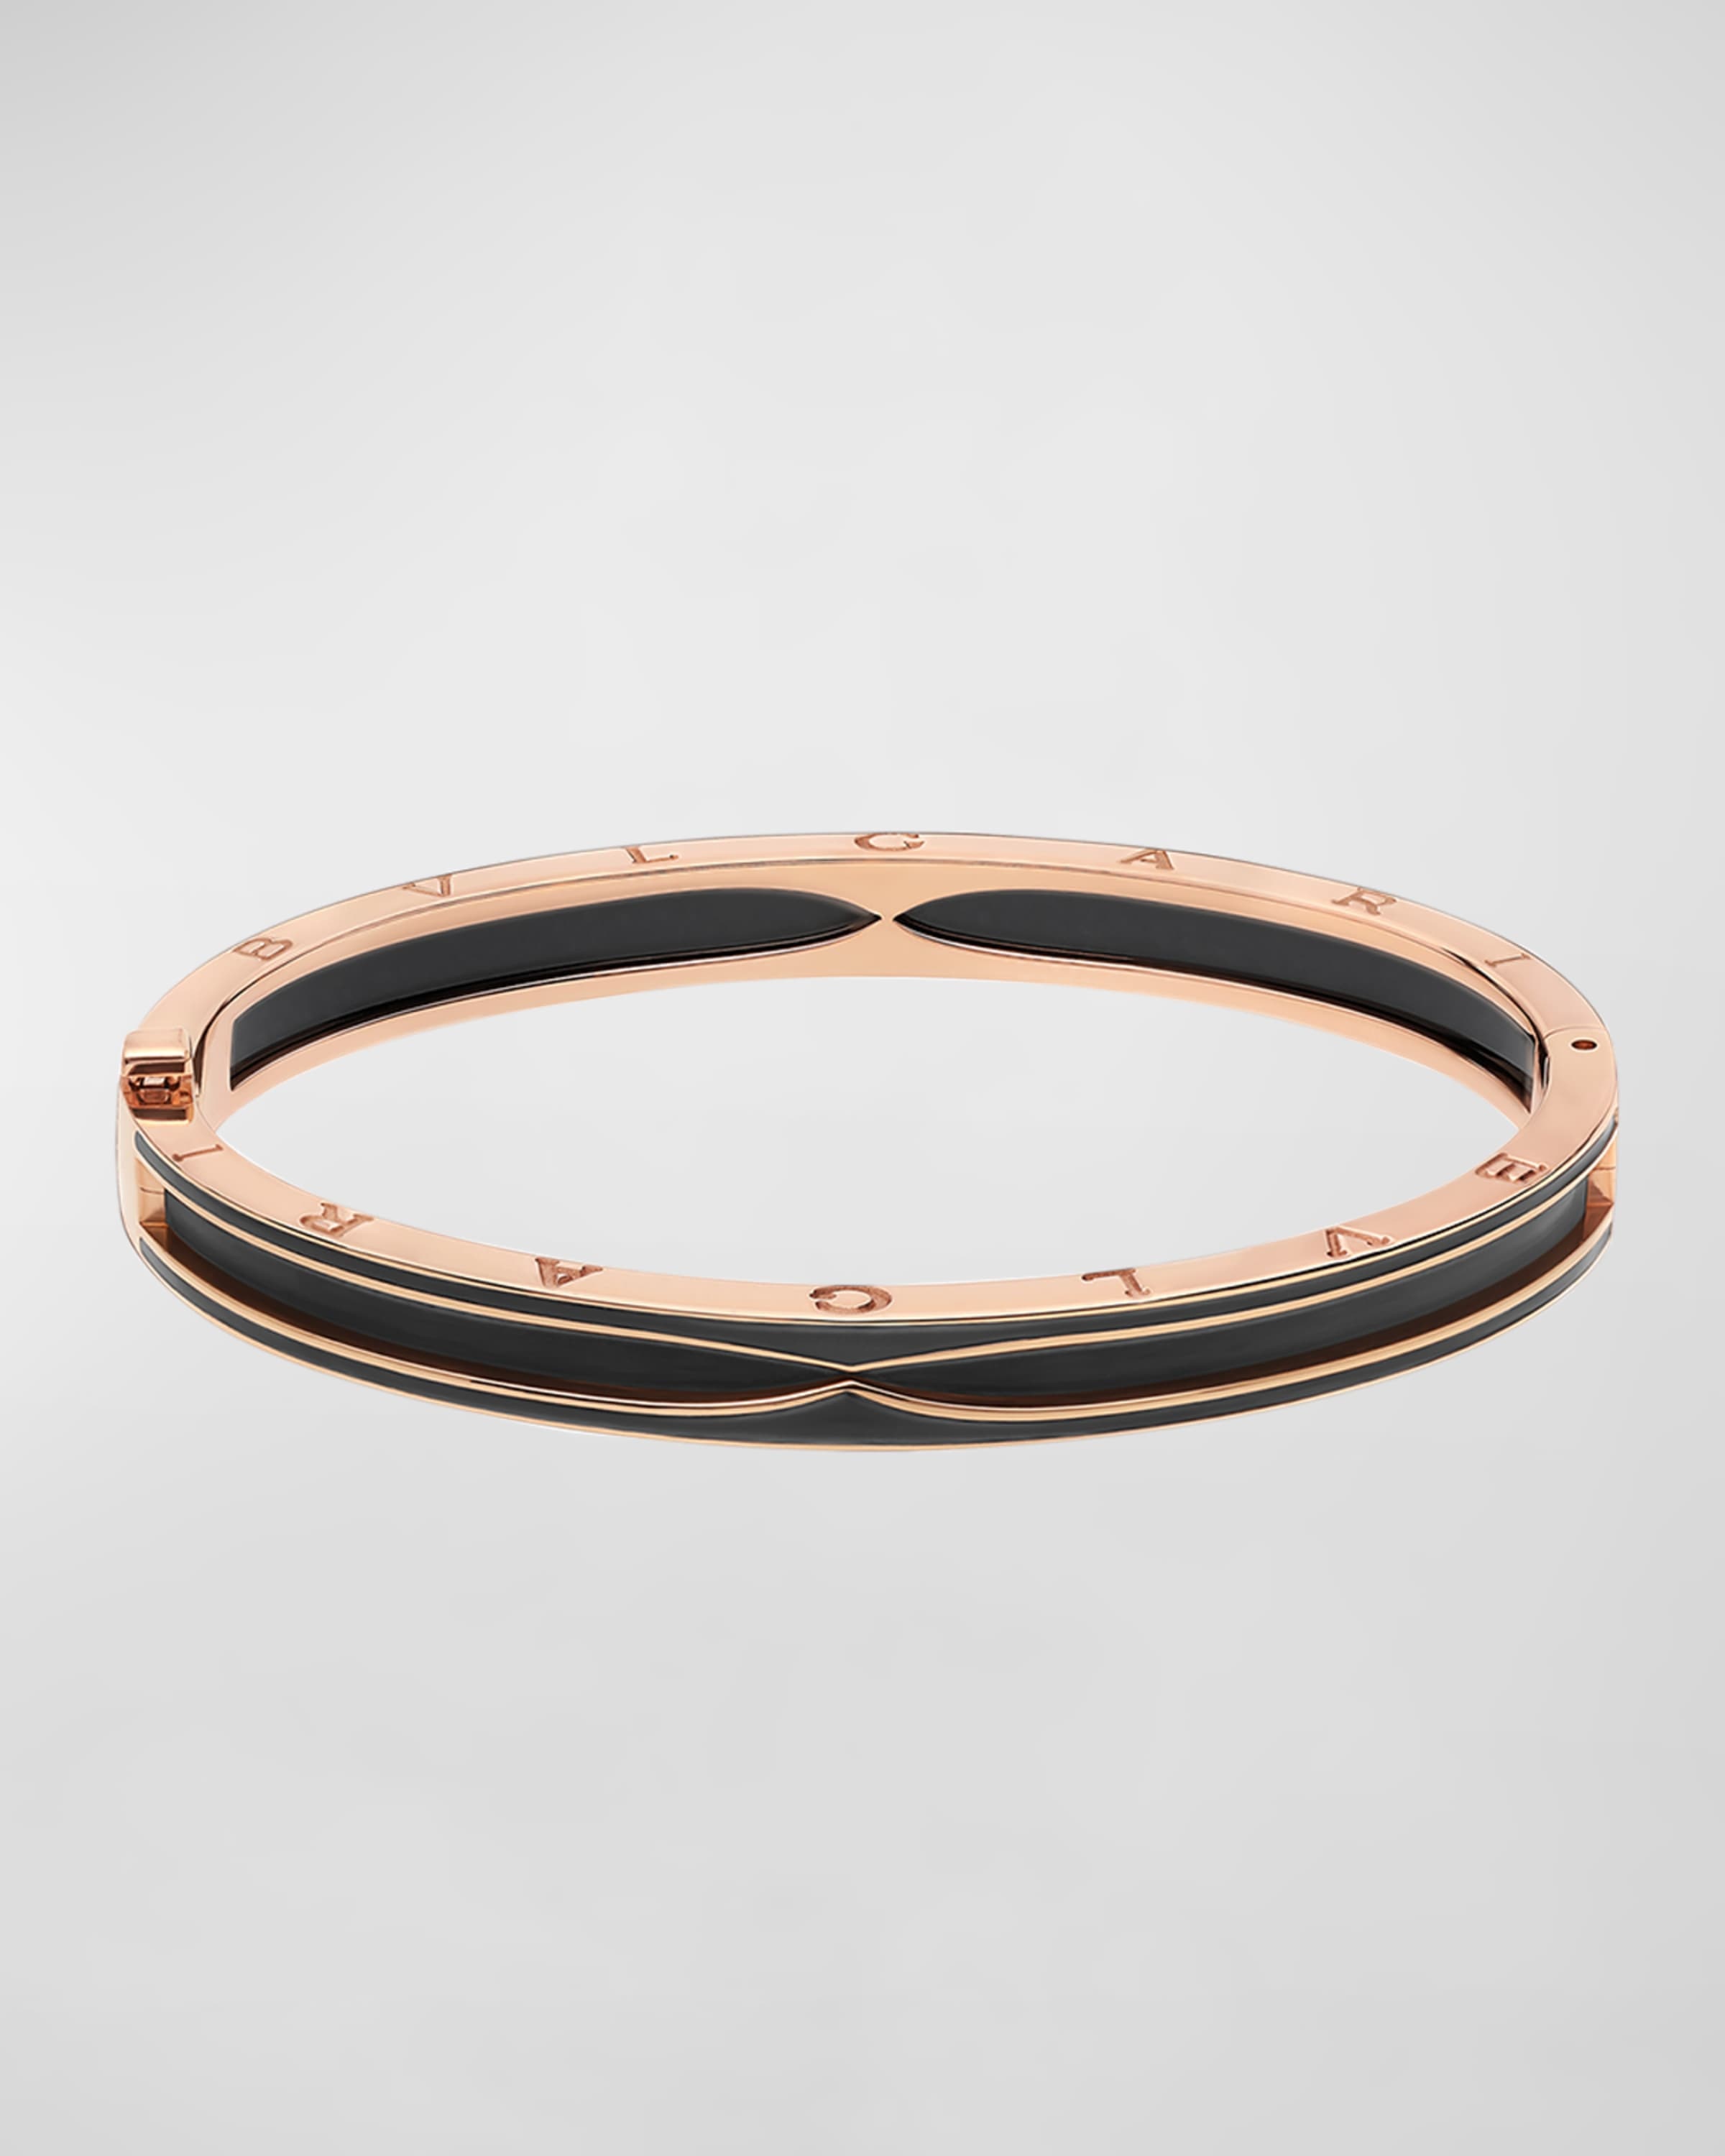 B.Zero1 Rose Gold Bracelet with Matte Black Ceramic Edge, Size XL - 4